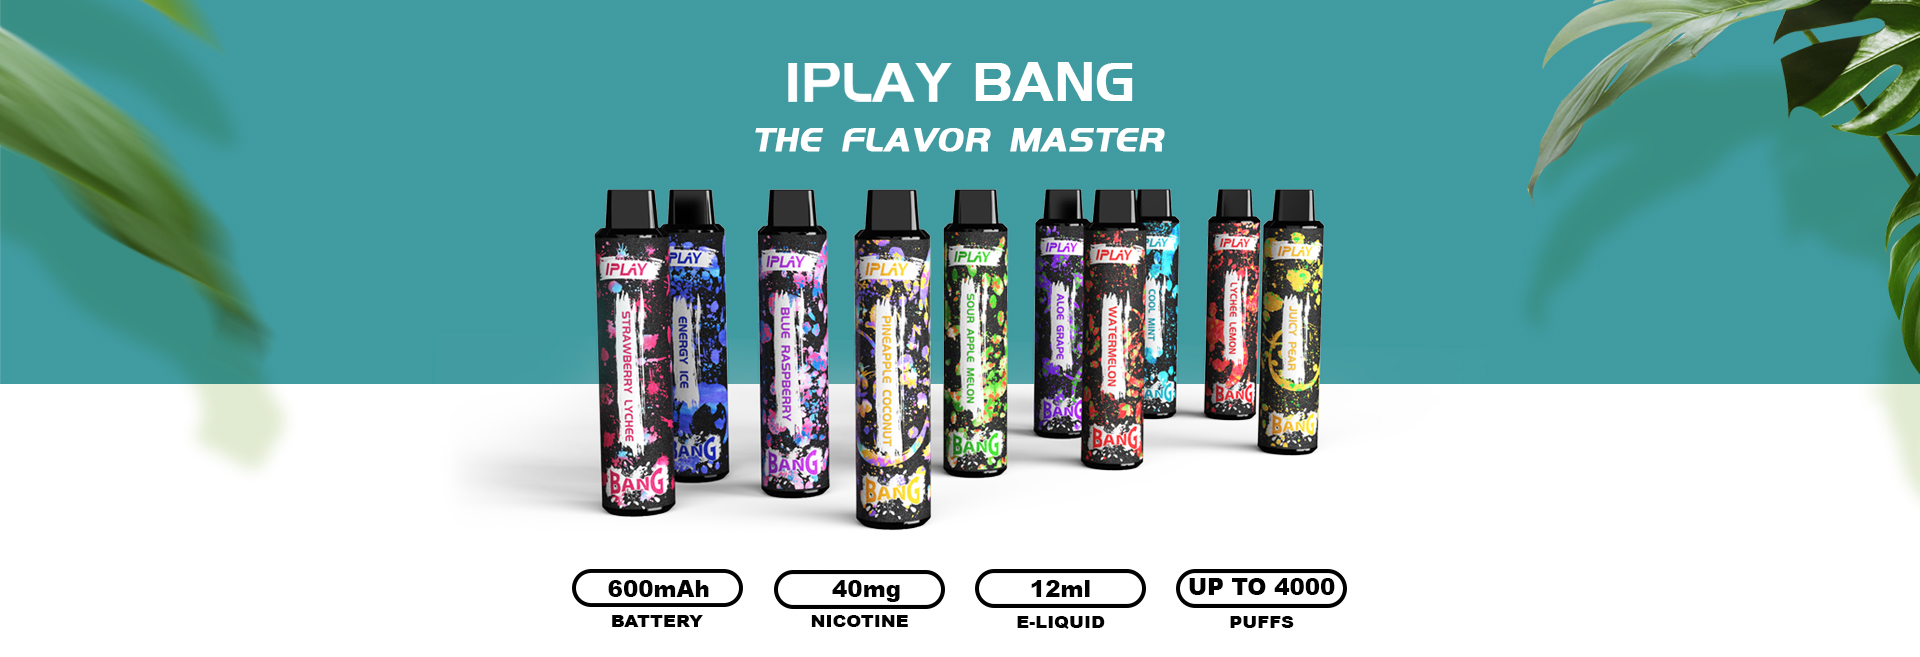 Iplay Bang Bang Vape - Banner